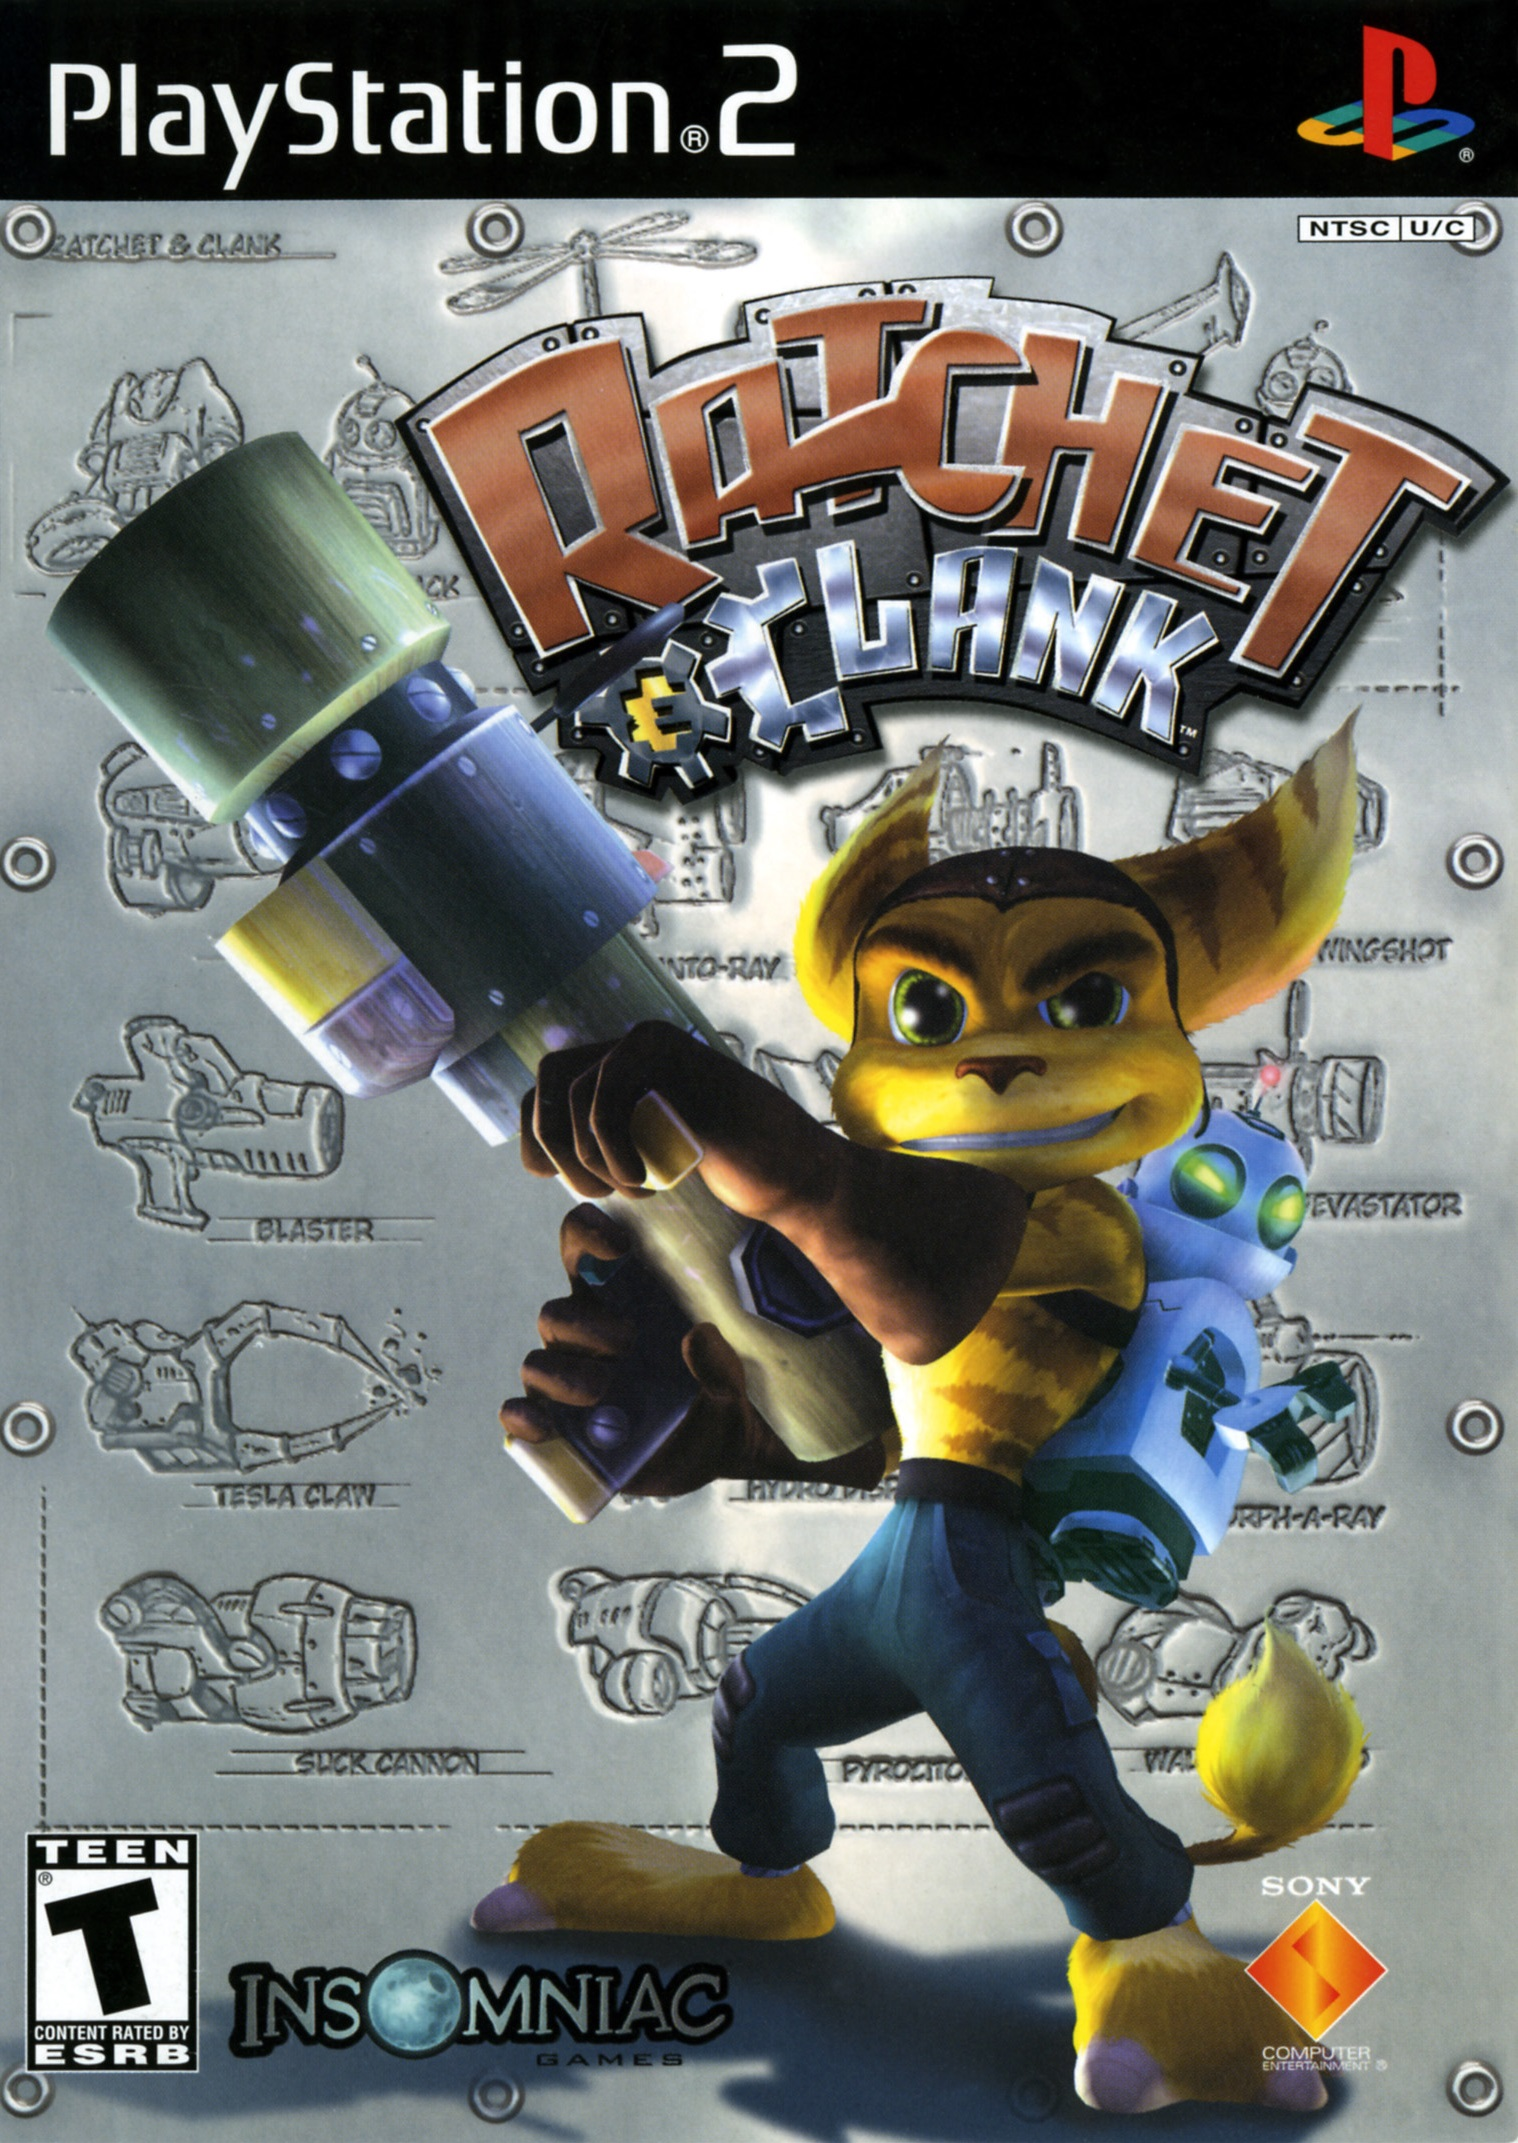 Ratchet & Clank (2002 game) | Ratchet & Clank Wiki | Fandom